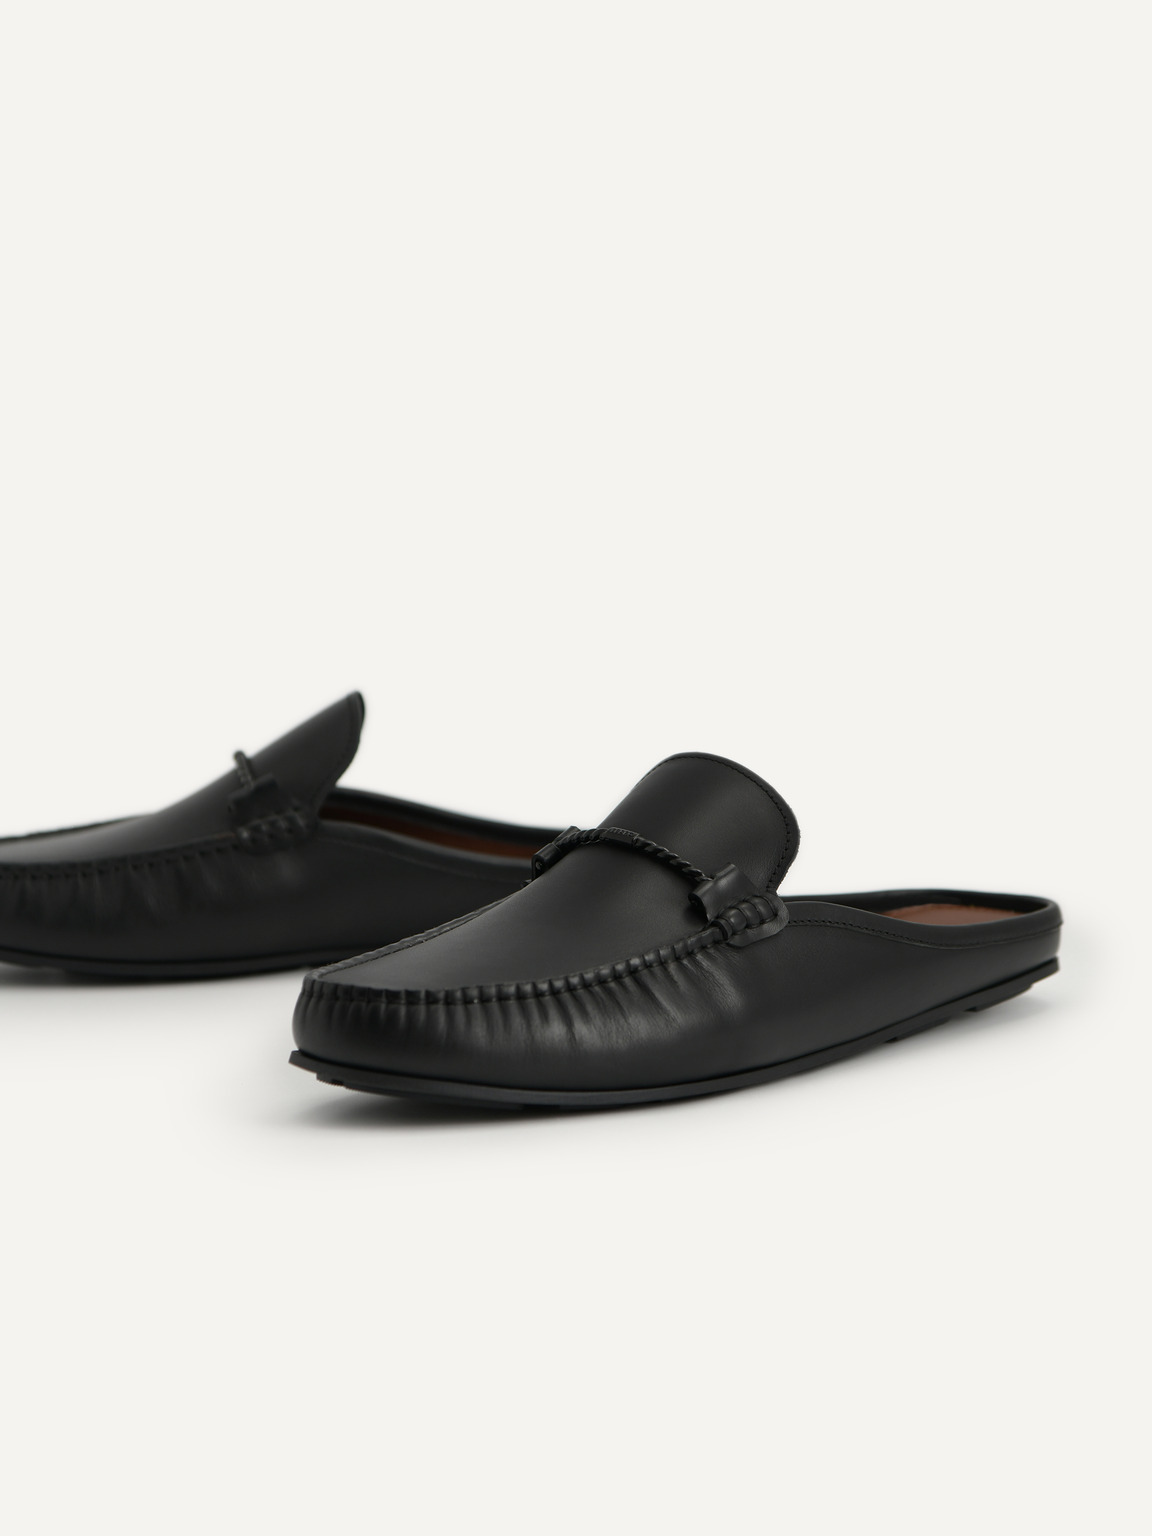 Leather Slip-On Driving Shoe, Black